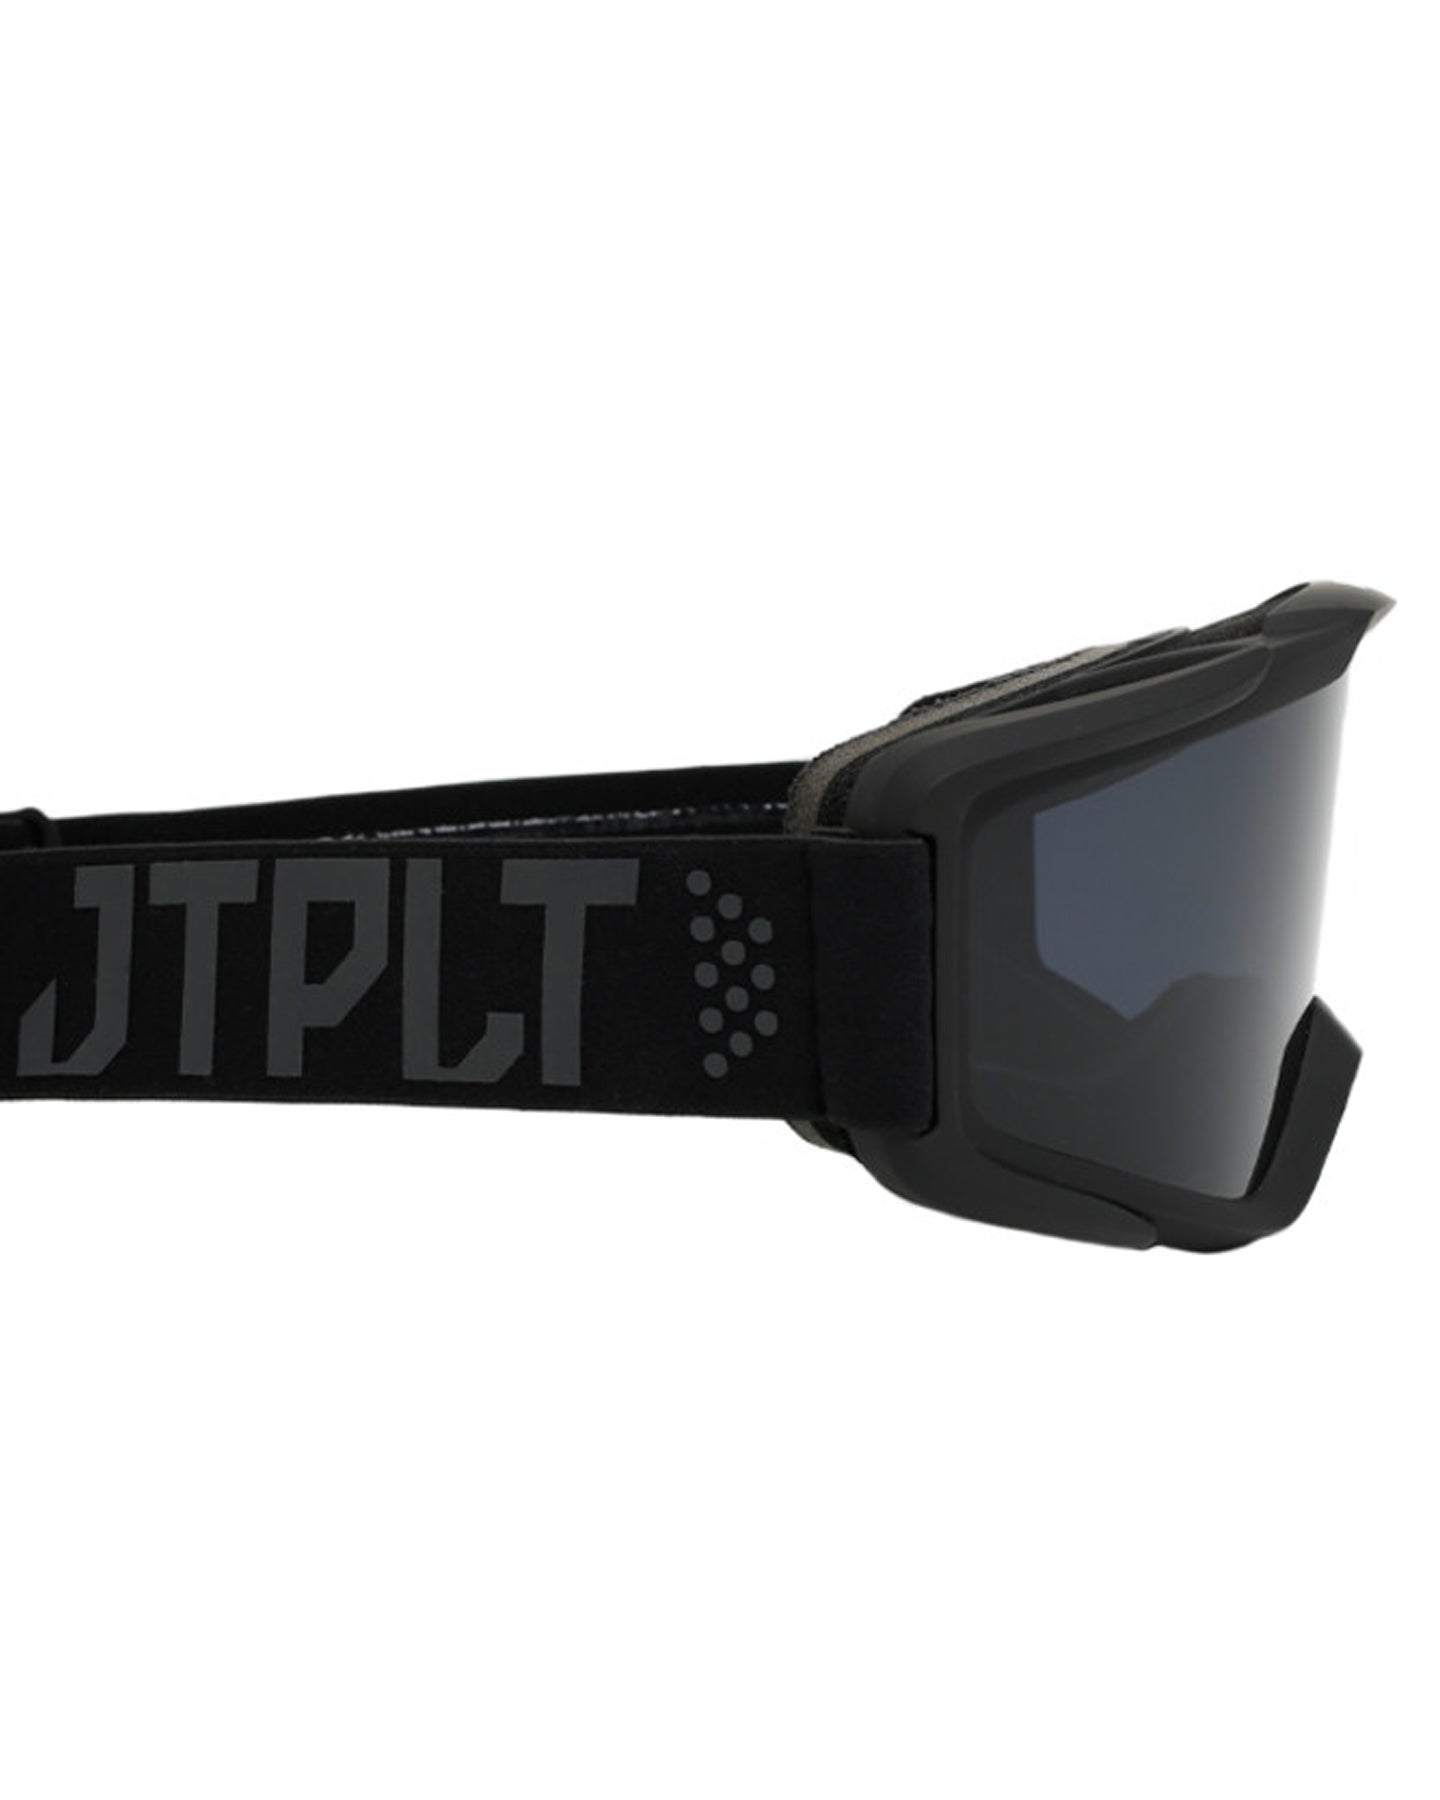 Shop Jet Ski Goggles - Jetpilot